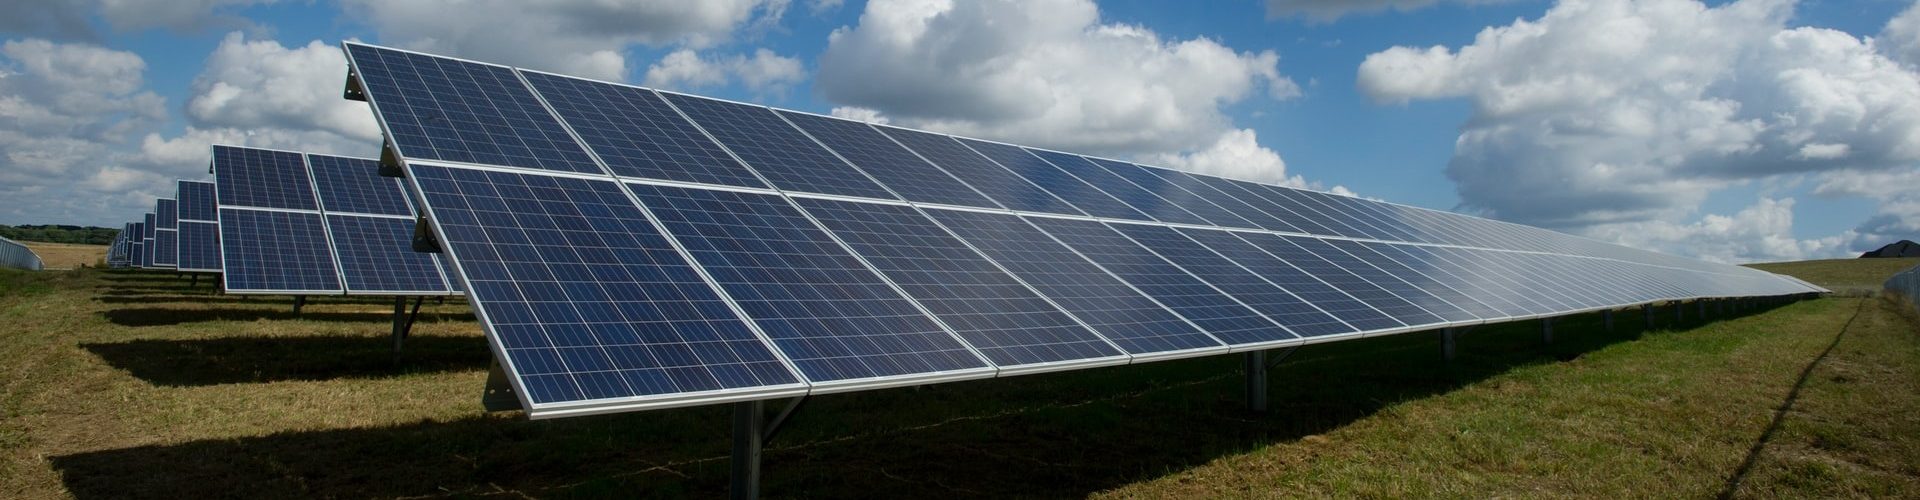 How Do Solar Panels Work Exactly?